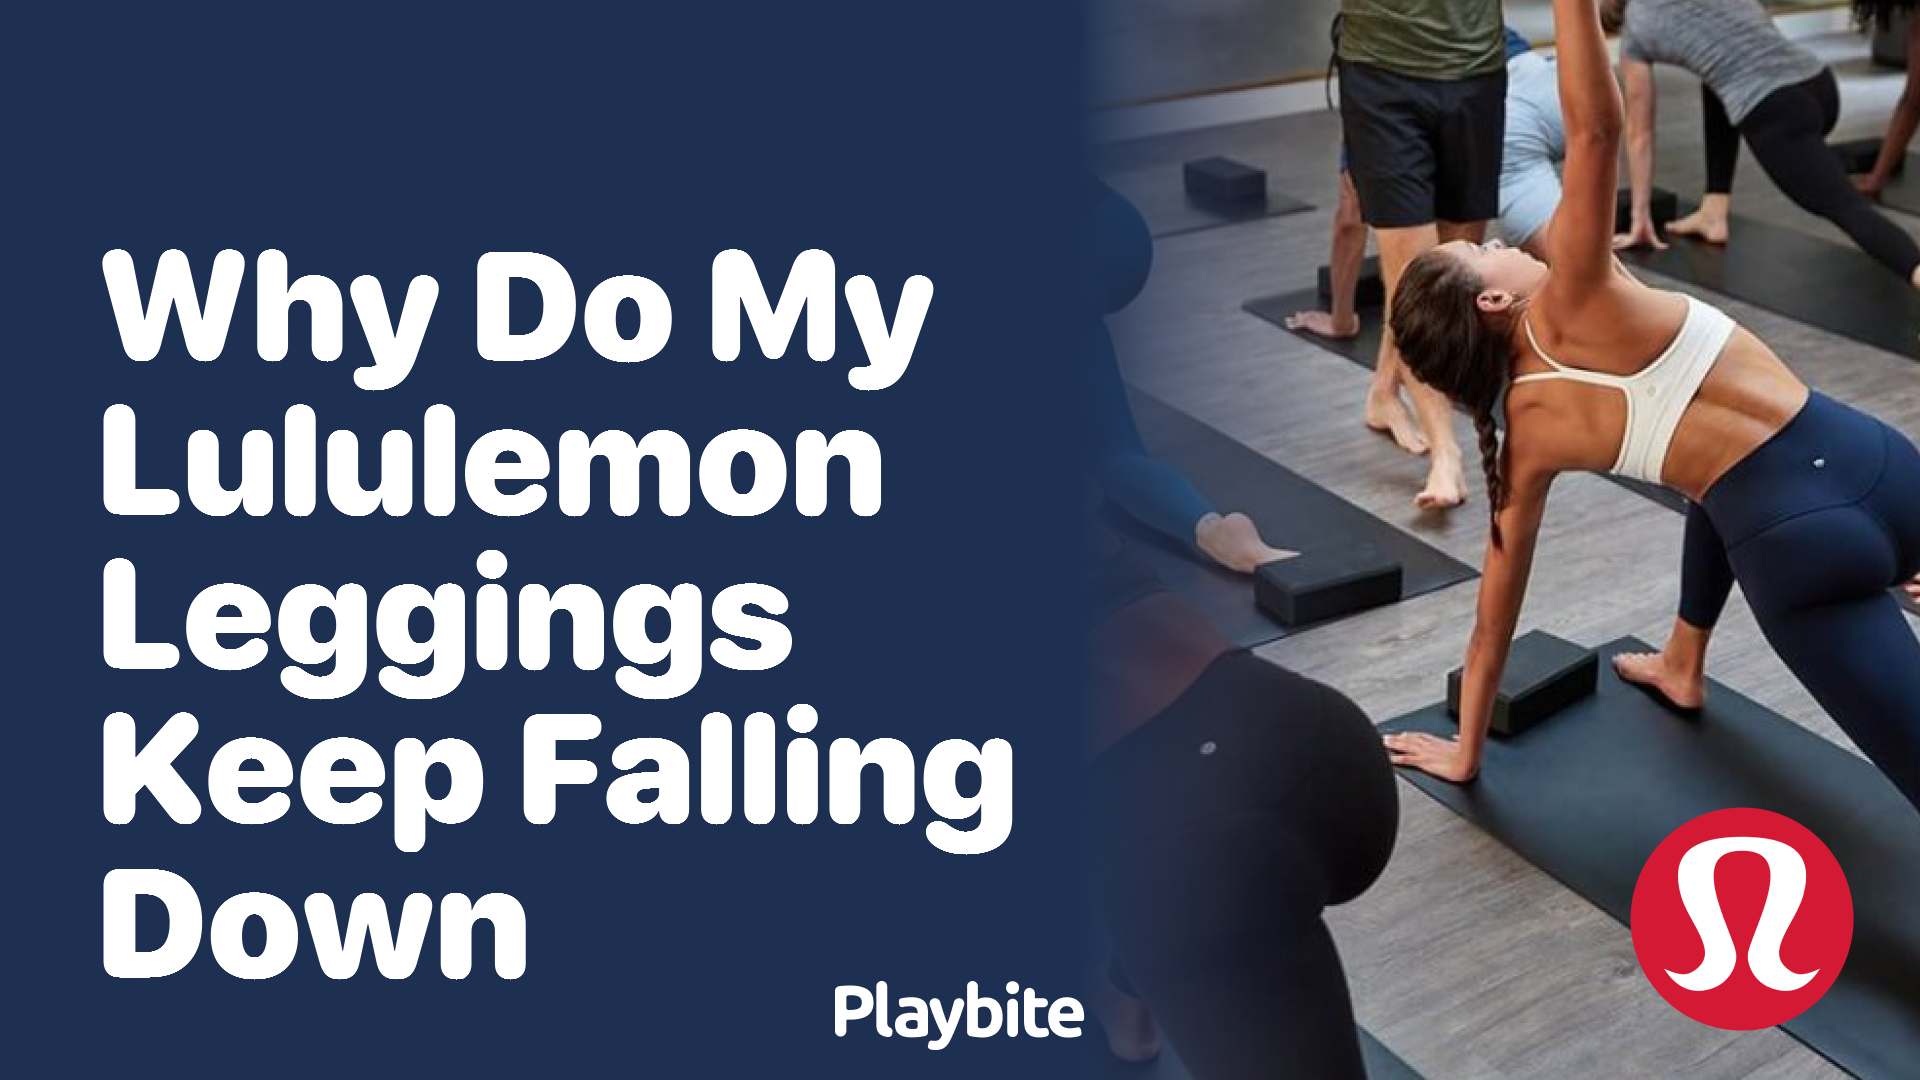 Why Do My Lululemon Leggings Keep Falling Down? - Playbite